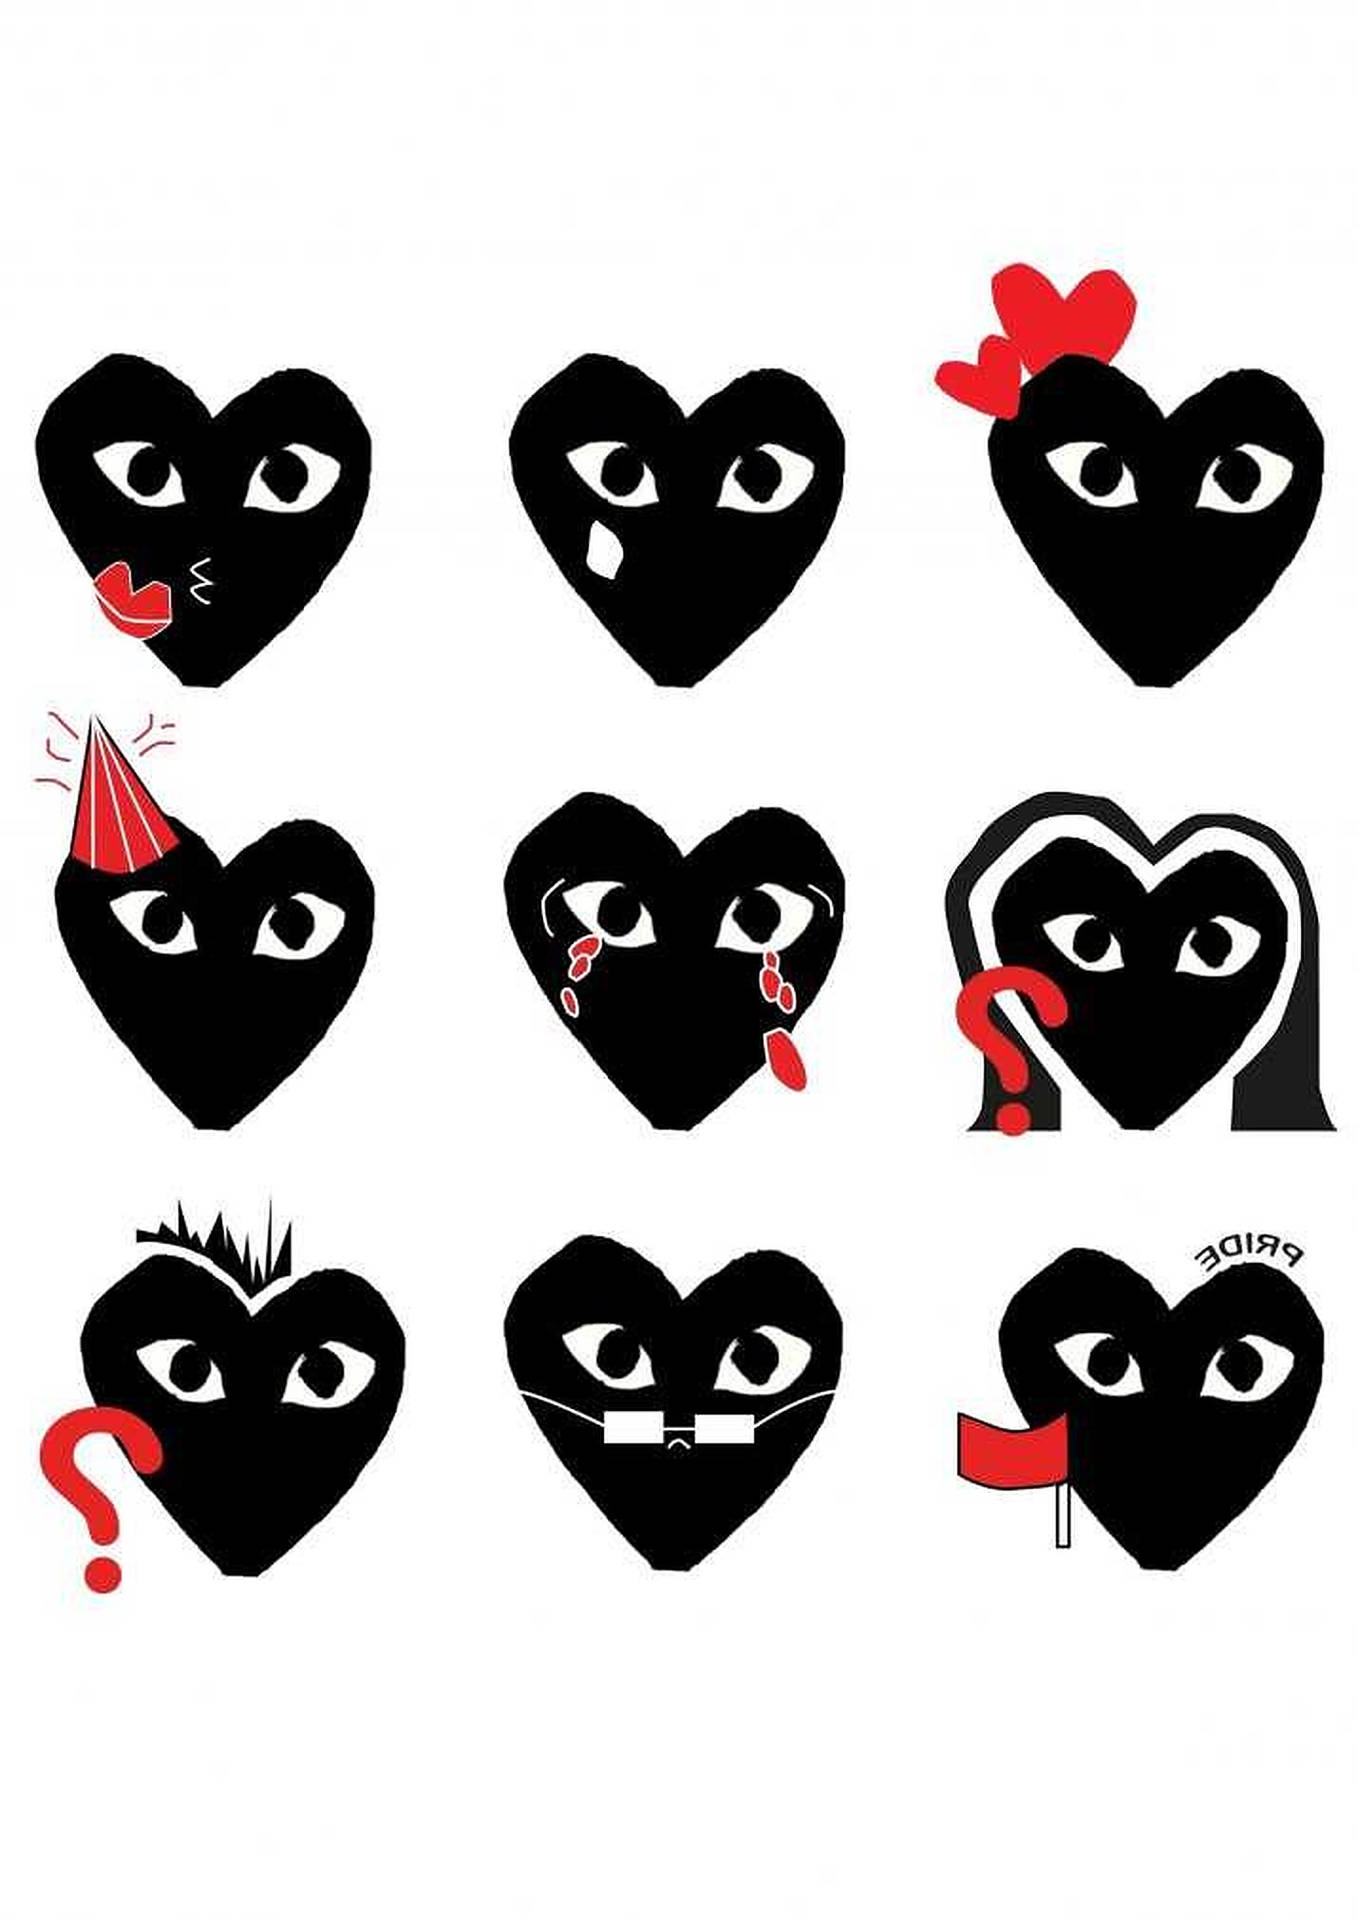 CDG Black Heart Emojis Wallpaper